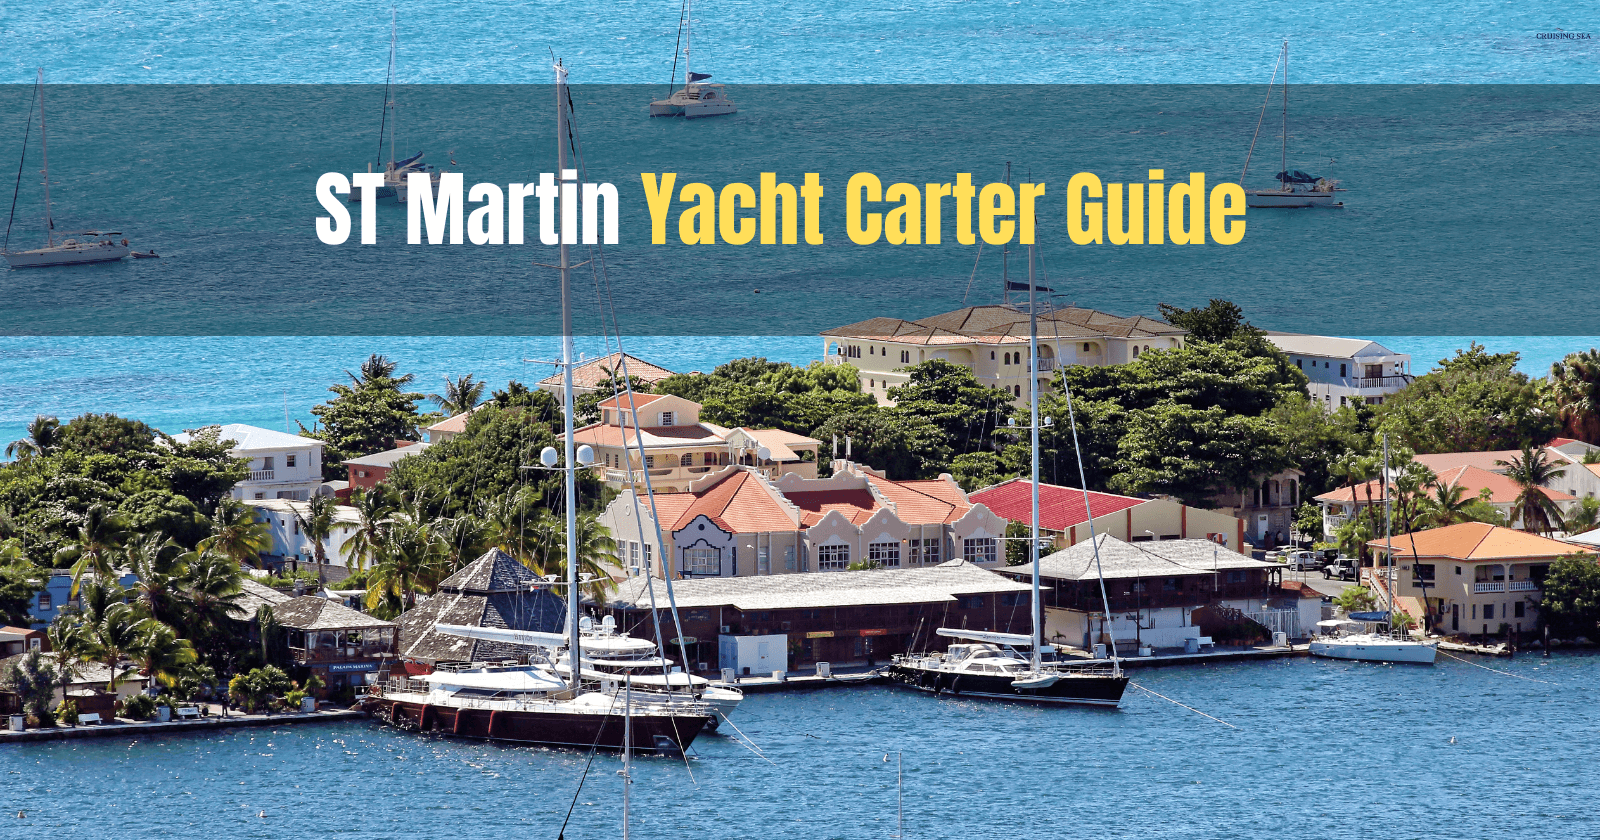 St Martin Yacht Charter Guide